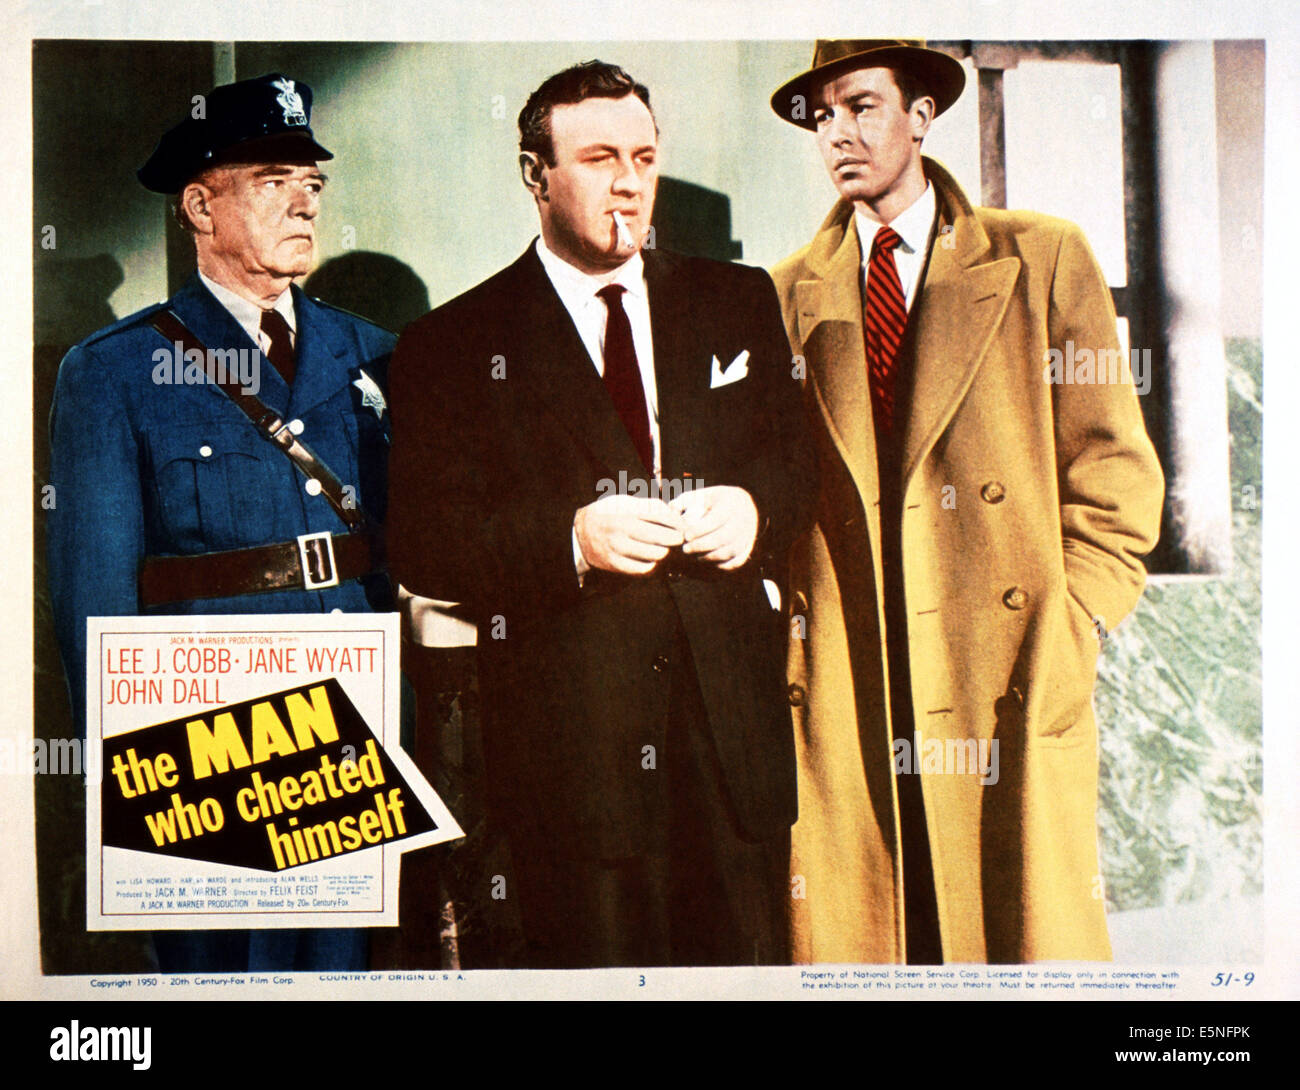 THE MAN WHO CHEATED HIMSELF, Lee J. Cobb (center), John Dall (right), 1950. ©20th Century-Fox Film Corporation, TM & Stock Photo